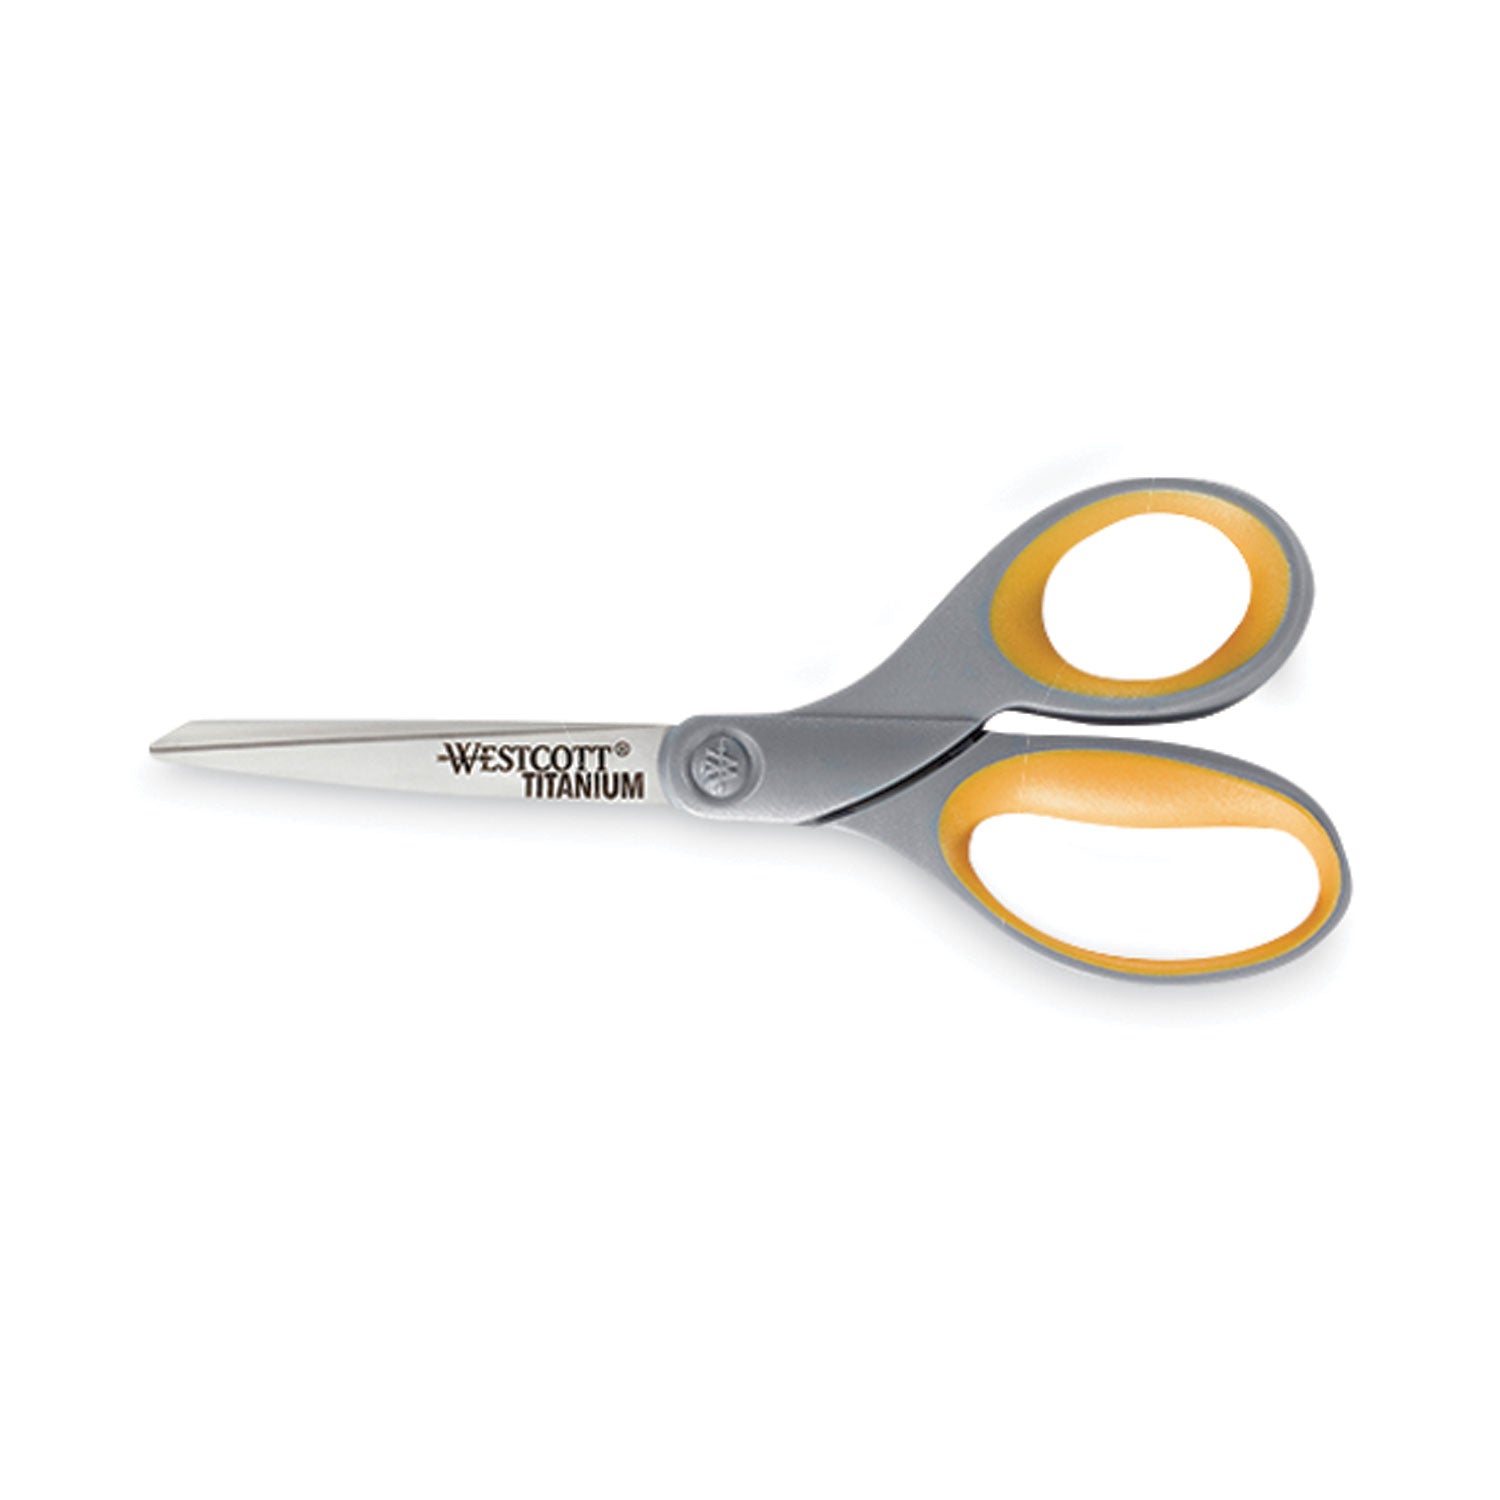 titanium-bonded-scissors-8-long-35-cut-length-gray-yellow-straight-handle-3-box_wtc17532 - 1